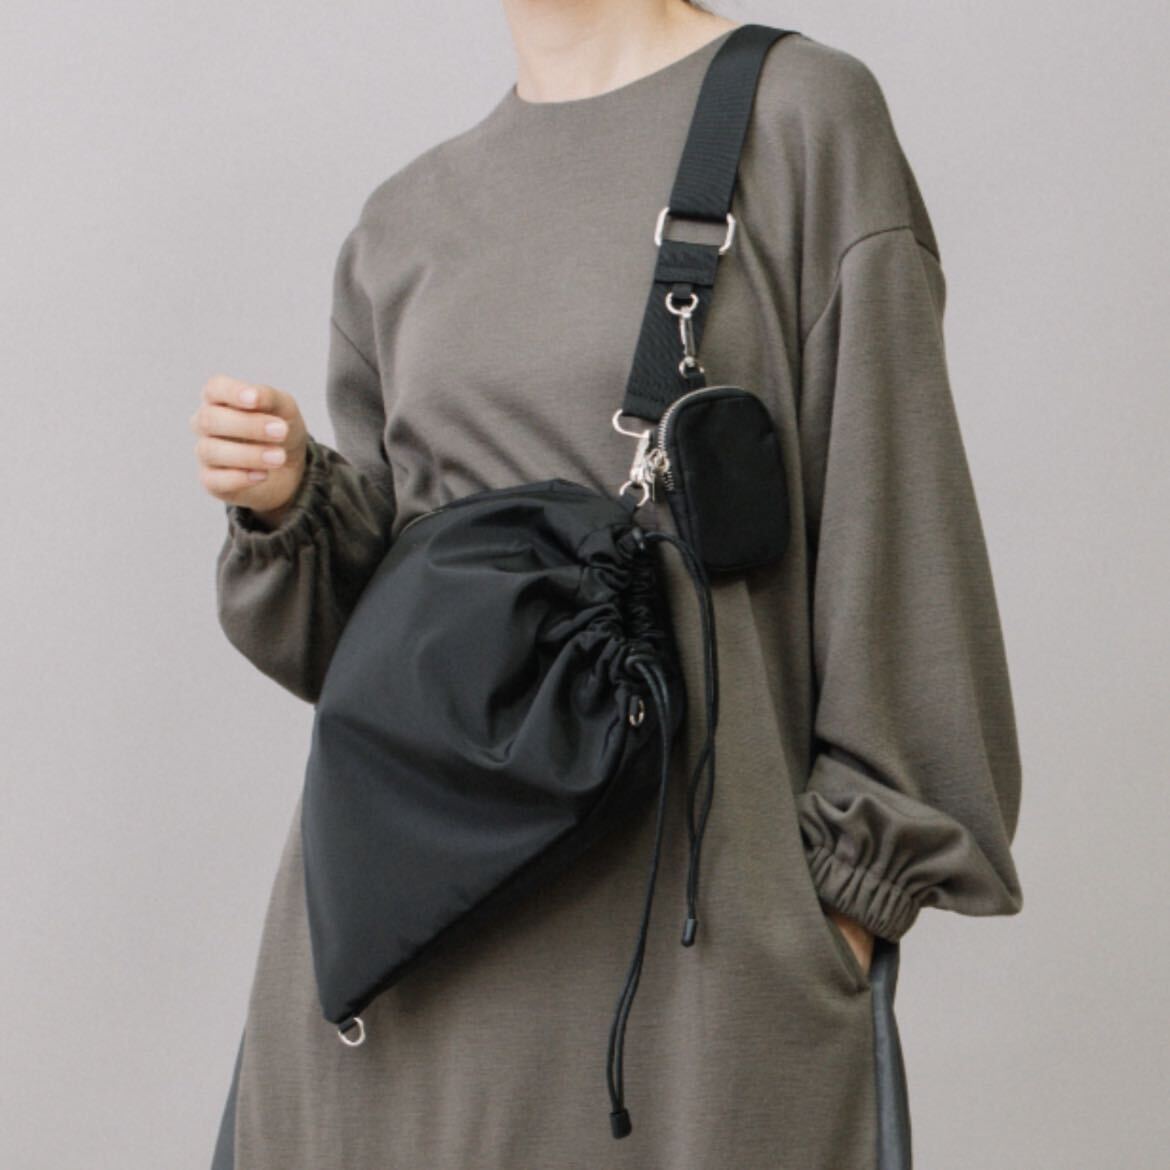  Mu nikmunich{Direction to get mosh} bright tsu il draw -stroke ring shoulder bag body back diagonal .. bag pouch 